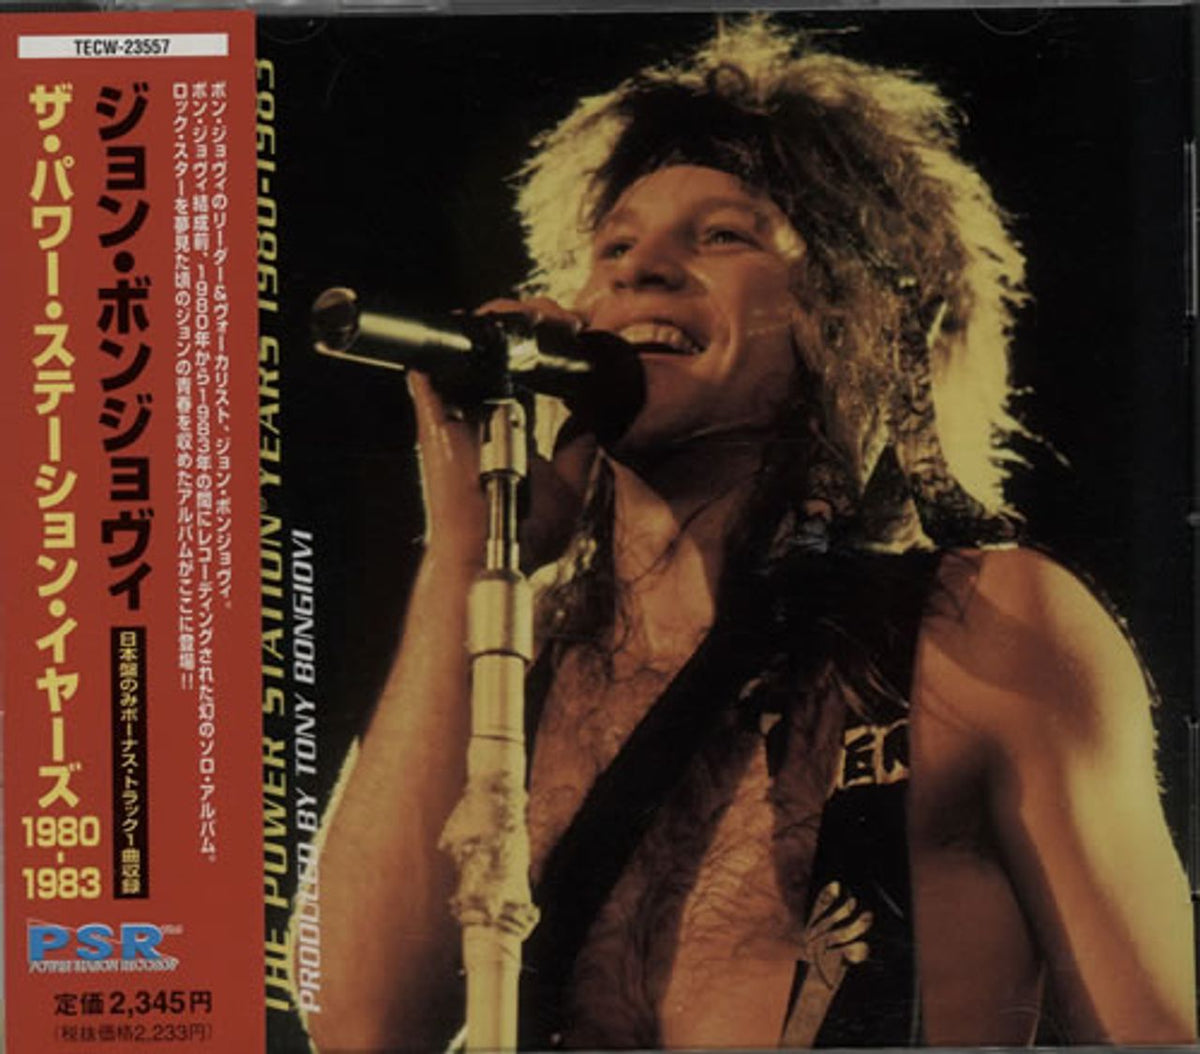 Jon Bon Jovi The Power Station Years 1980-1983 Japanese Promo CD album —  RareVinyl.com